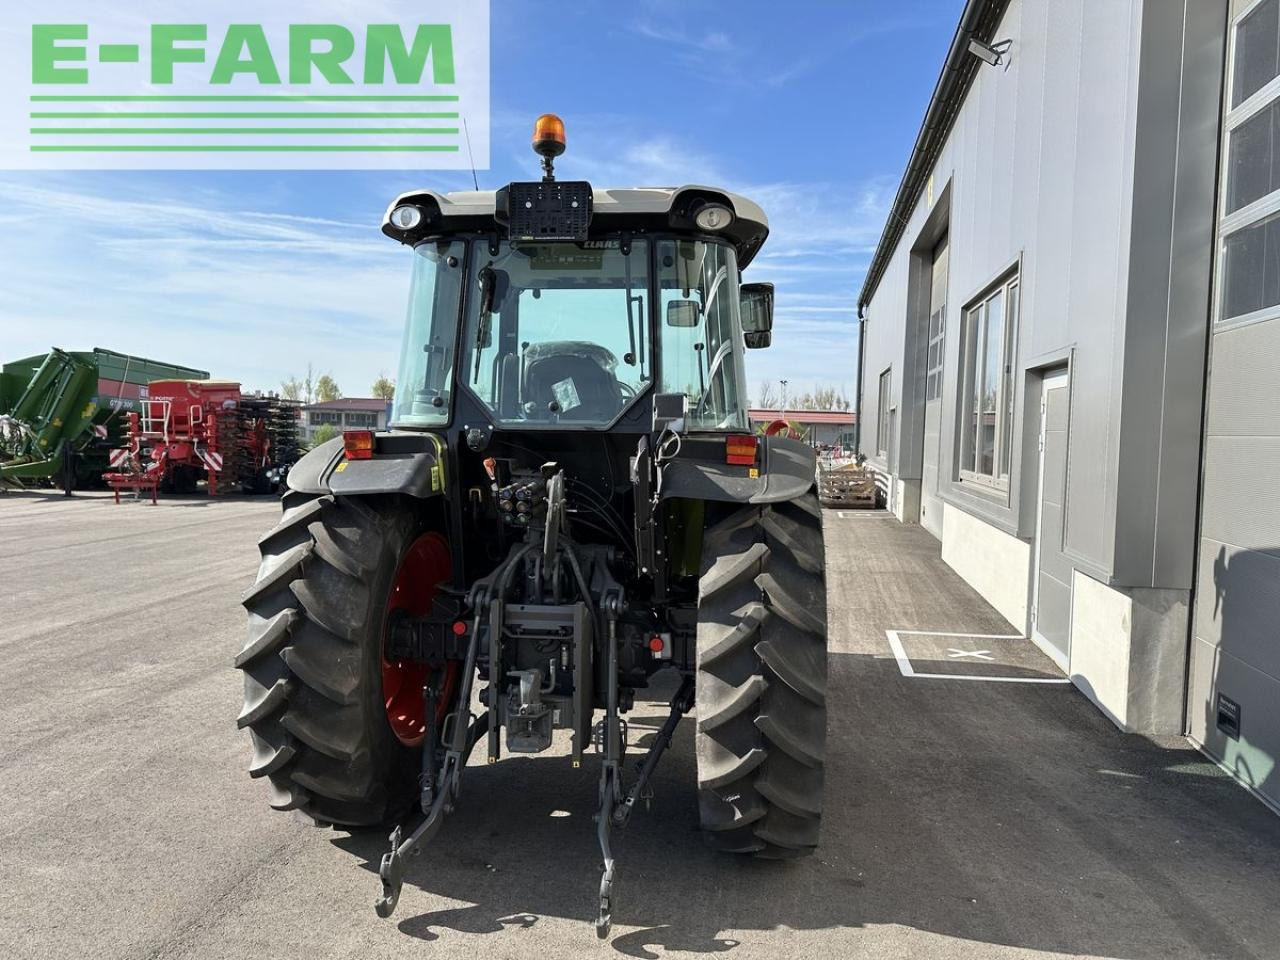 Farm tractor CLAAS axos 240